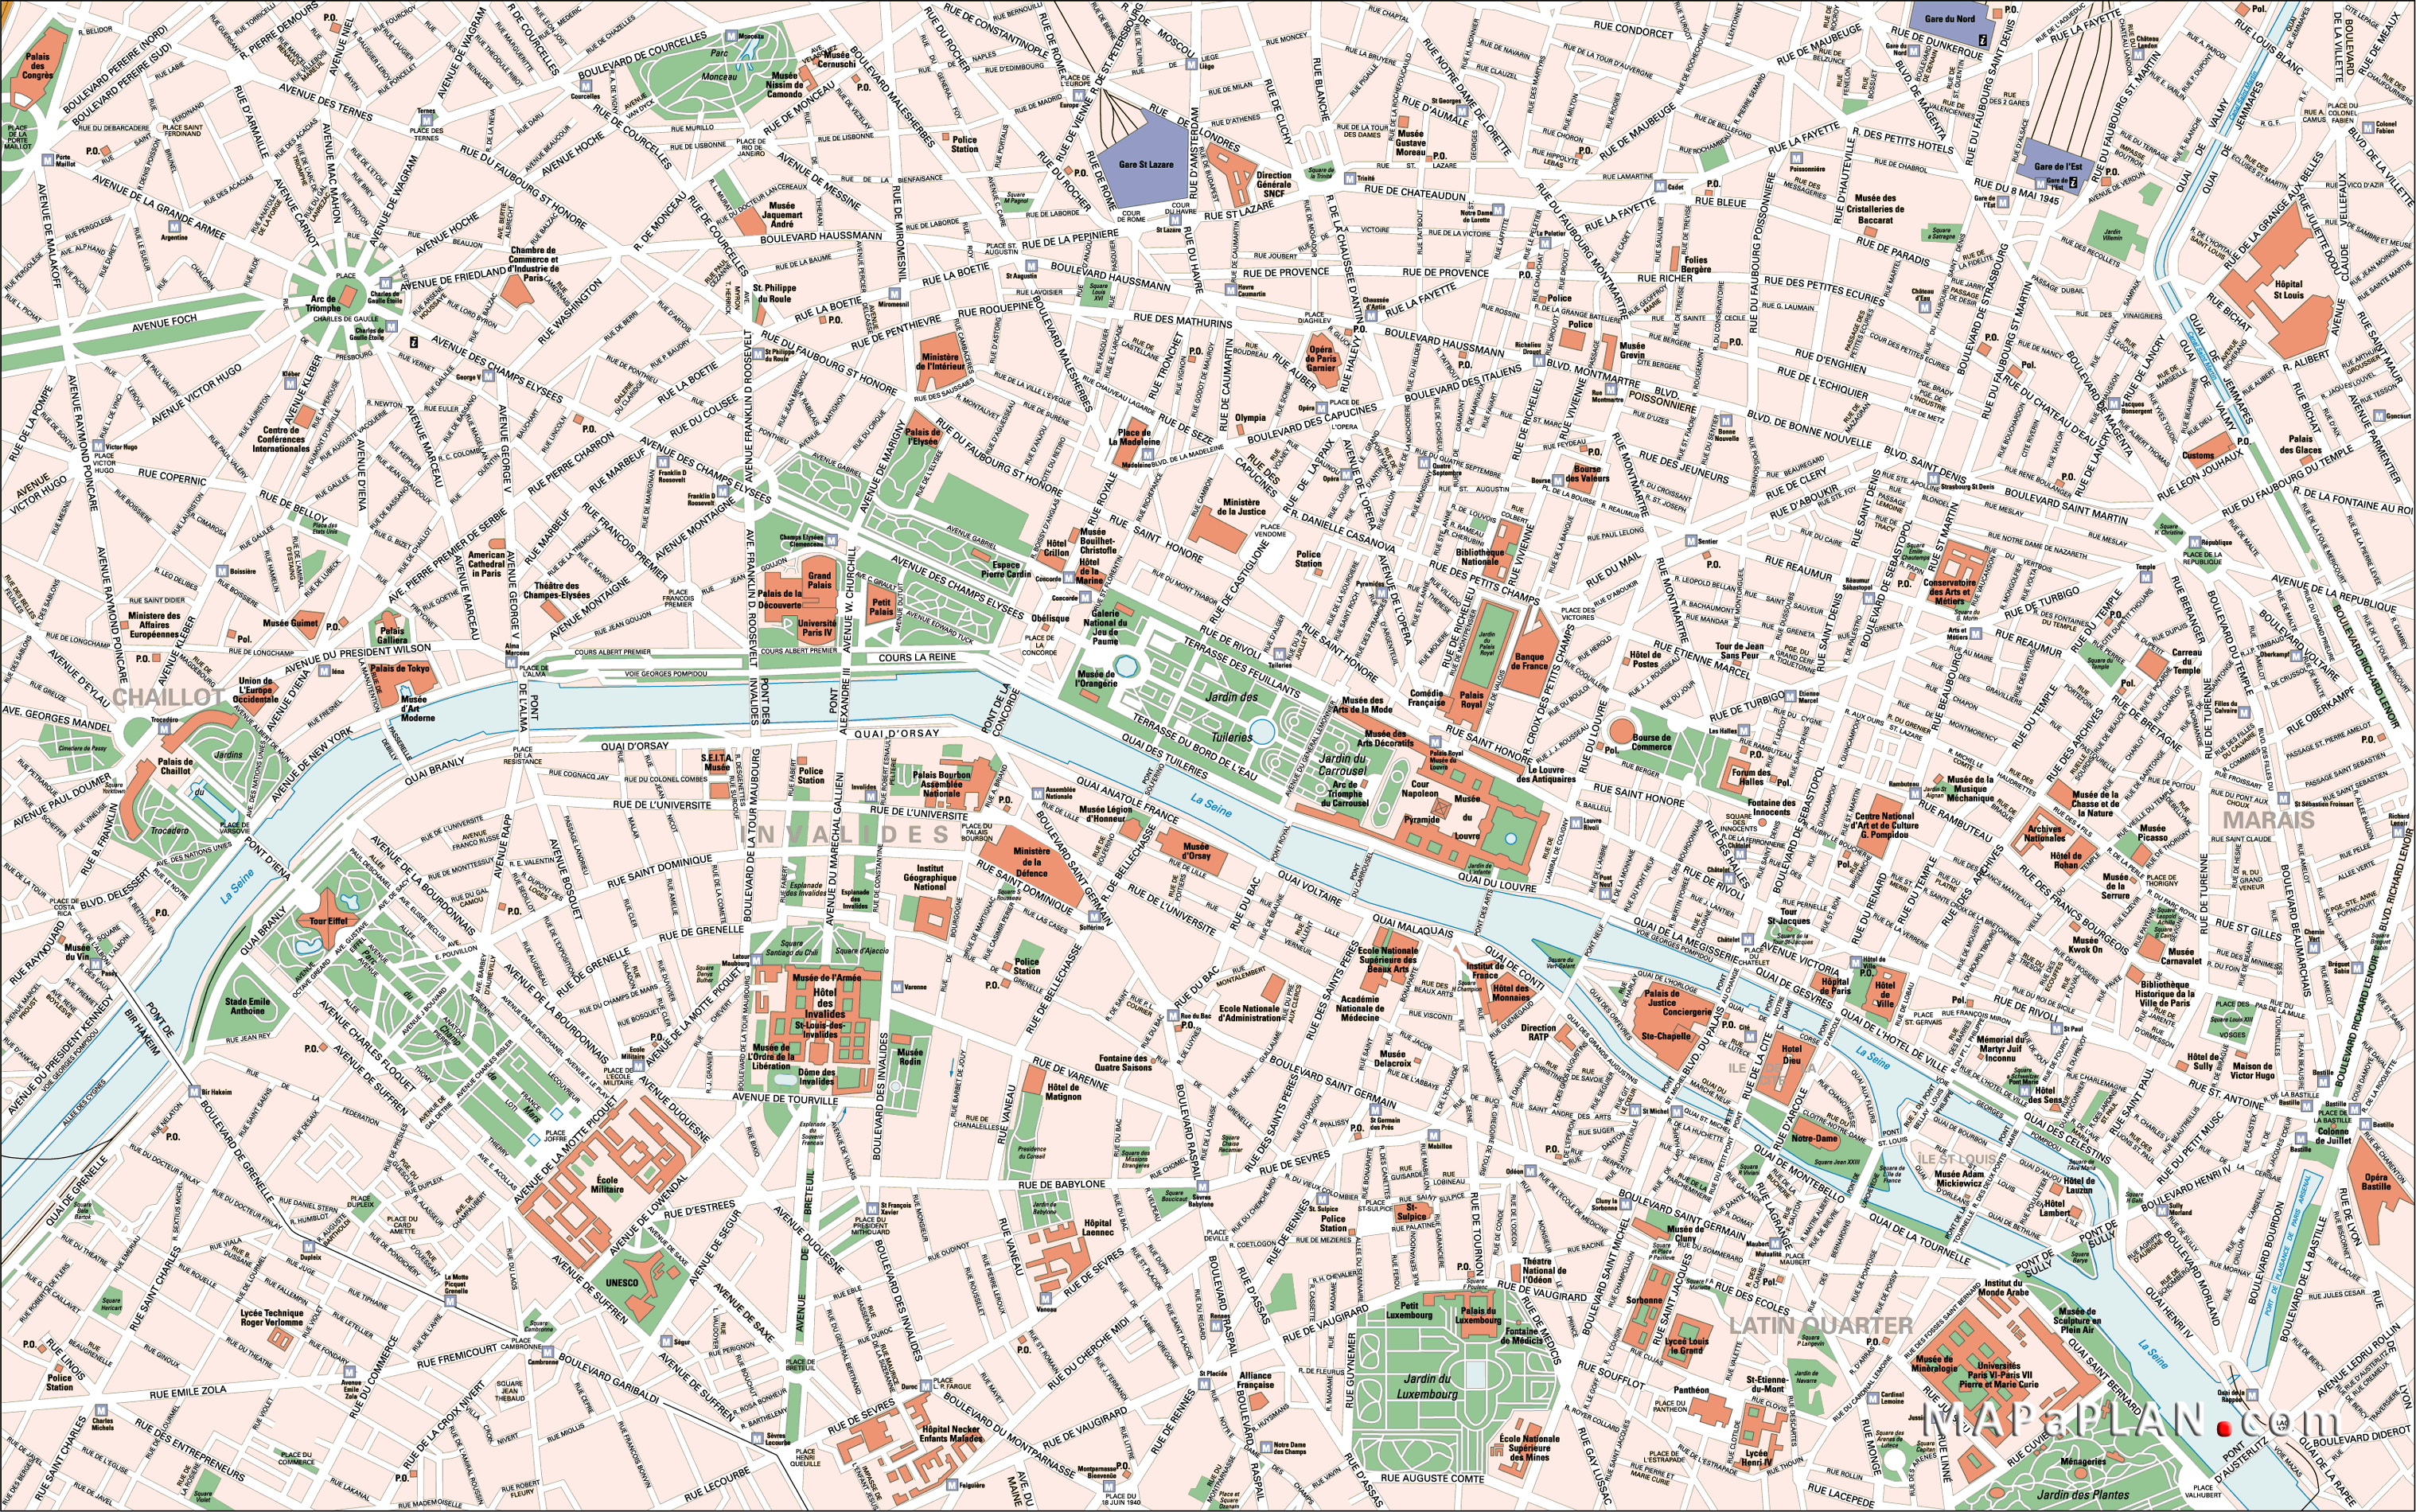 paris-maps-top-tourist-attractions-free-printable-mapaplan